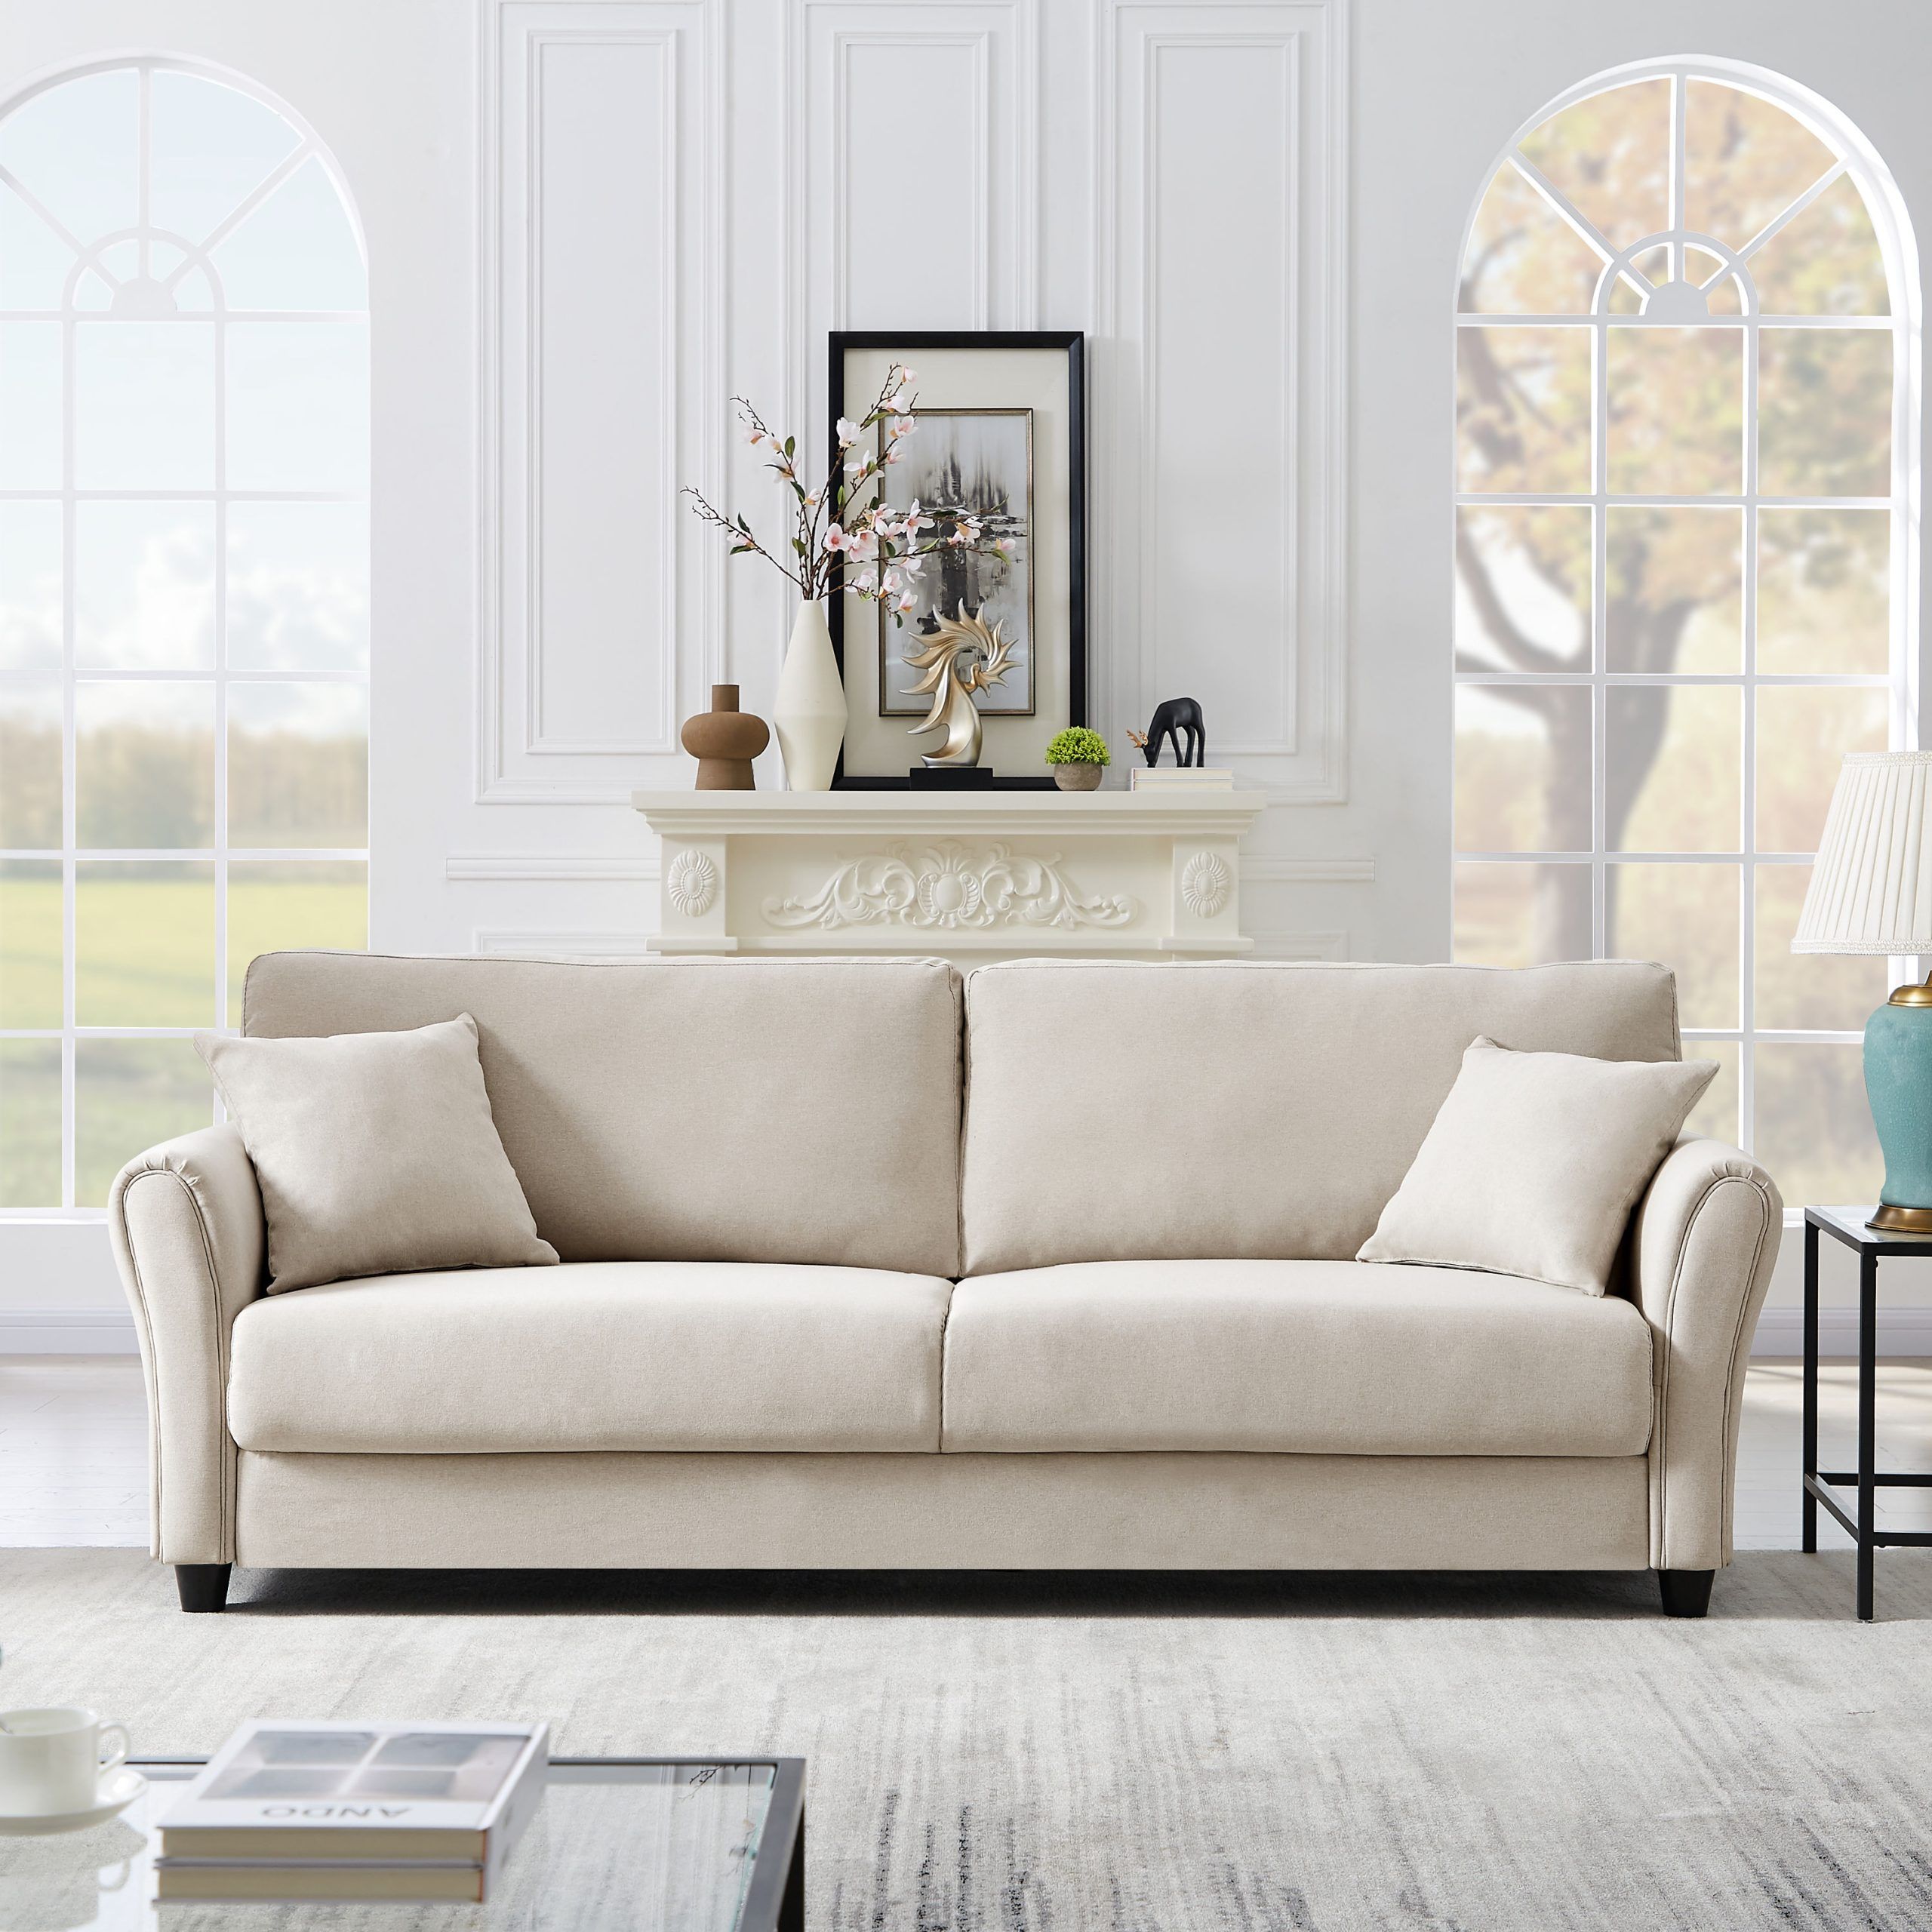 Casainc Fabric 3 Seater Sofa  (View 15 of 15)